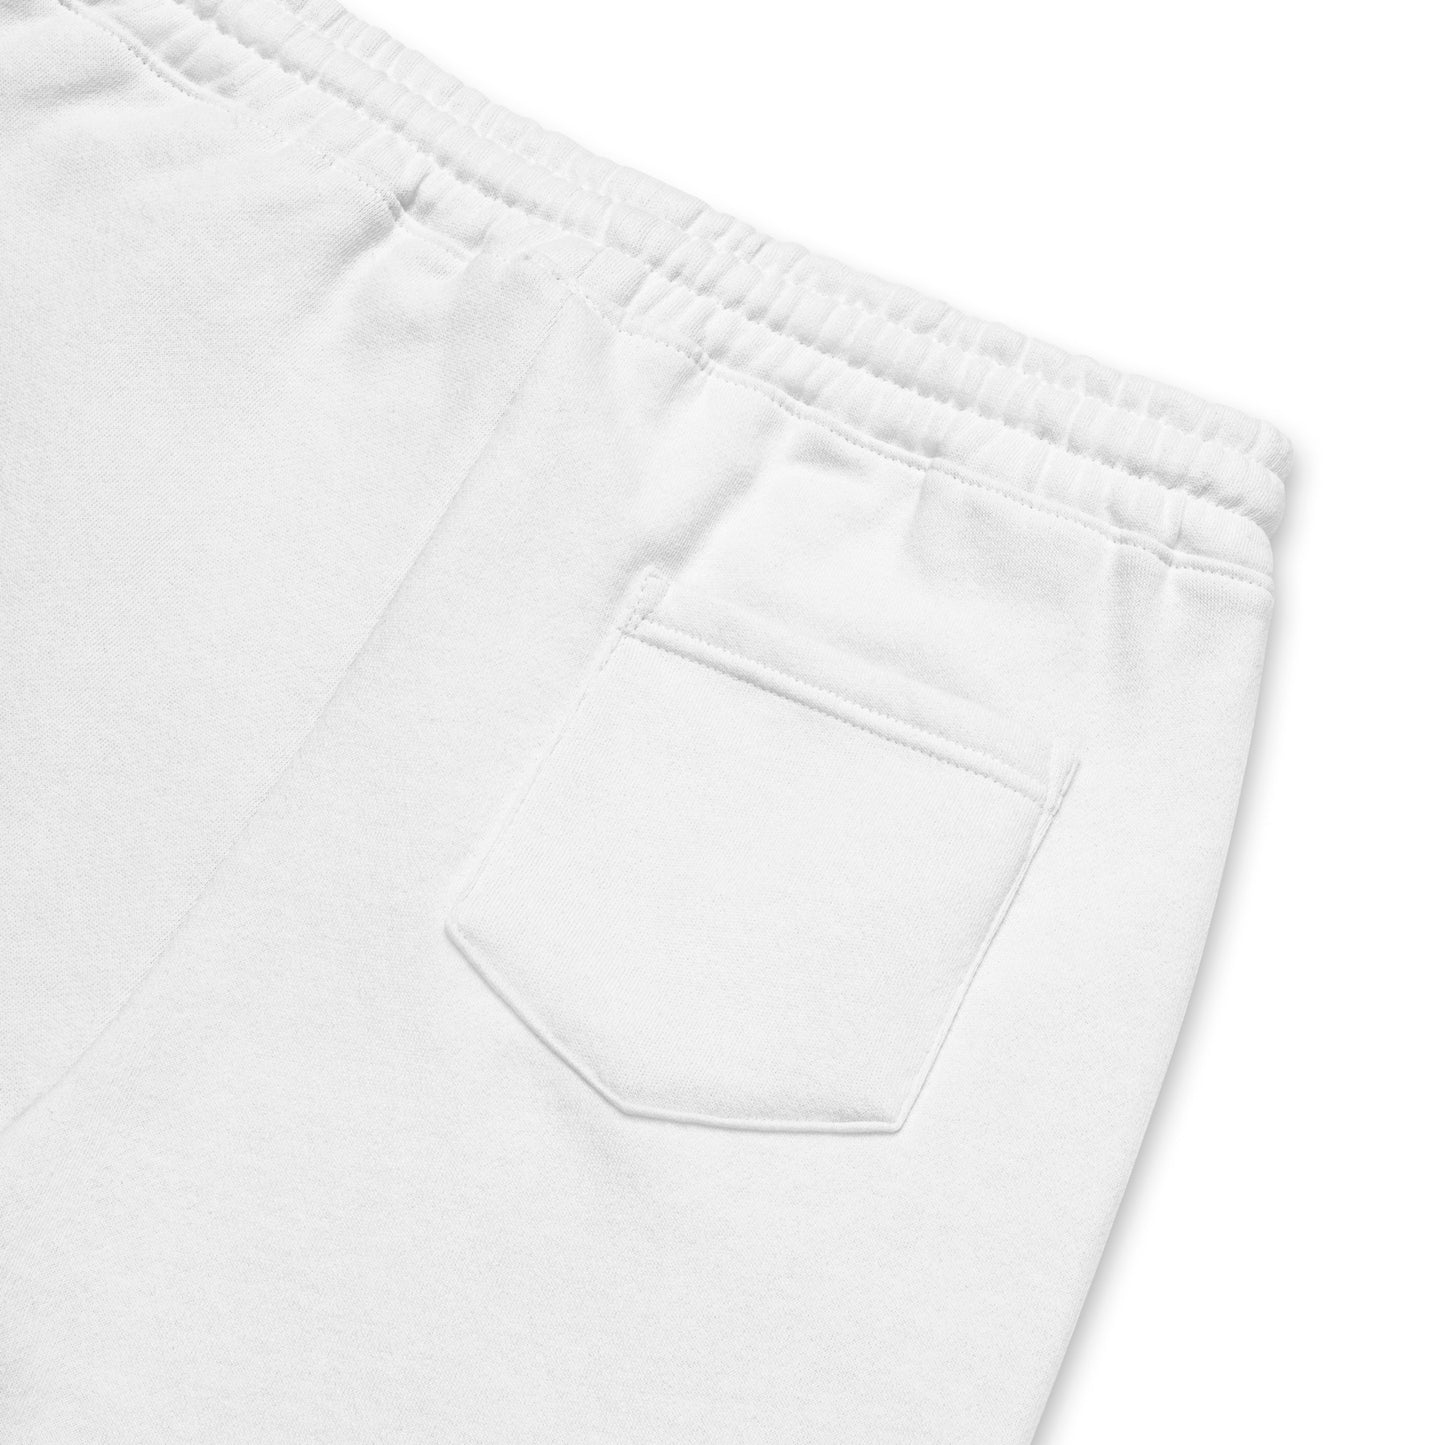 Flamingo Essentials - White fleece shorts